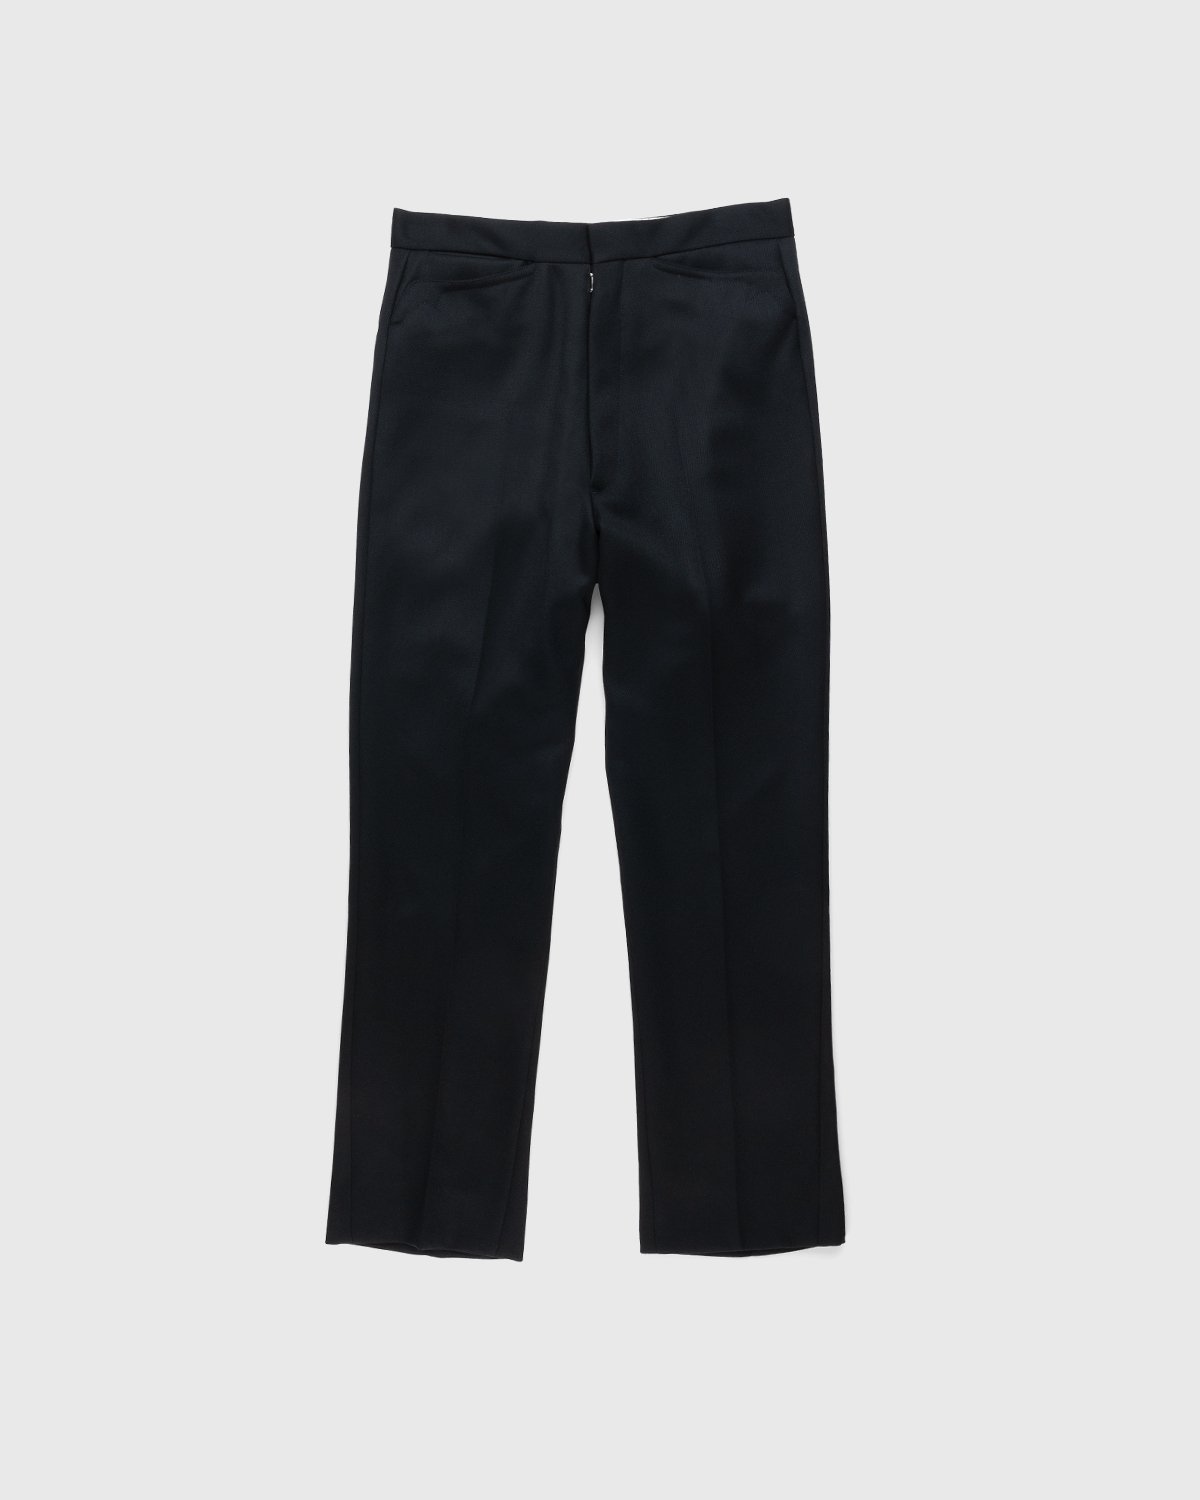 Maison Margiela – Gabardine Trousers Black | Highsnobiety Shop